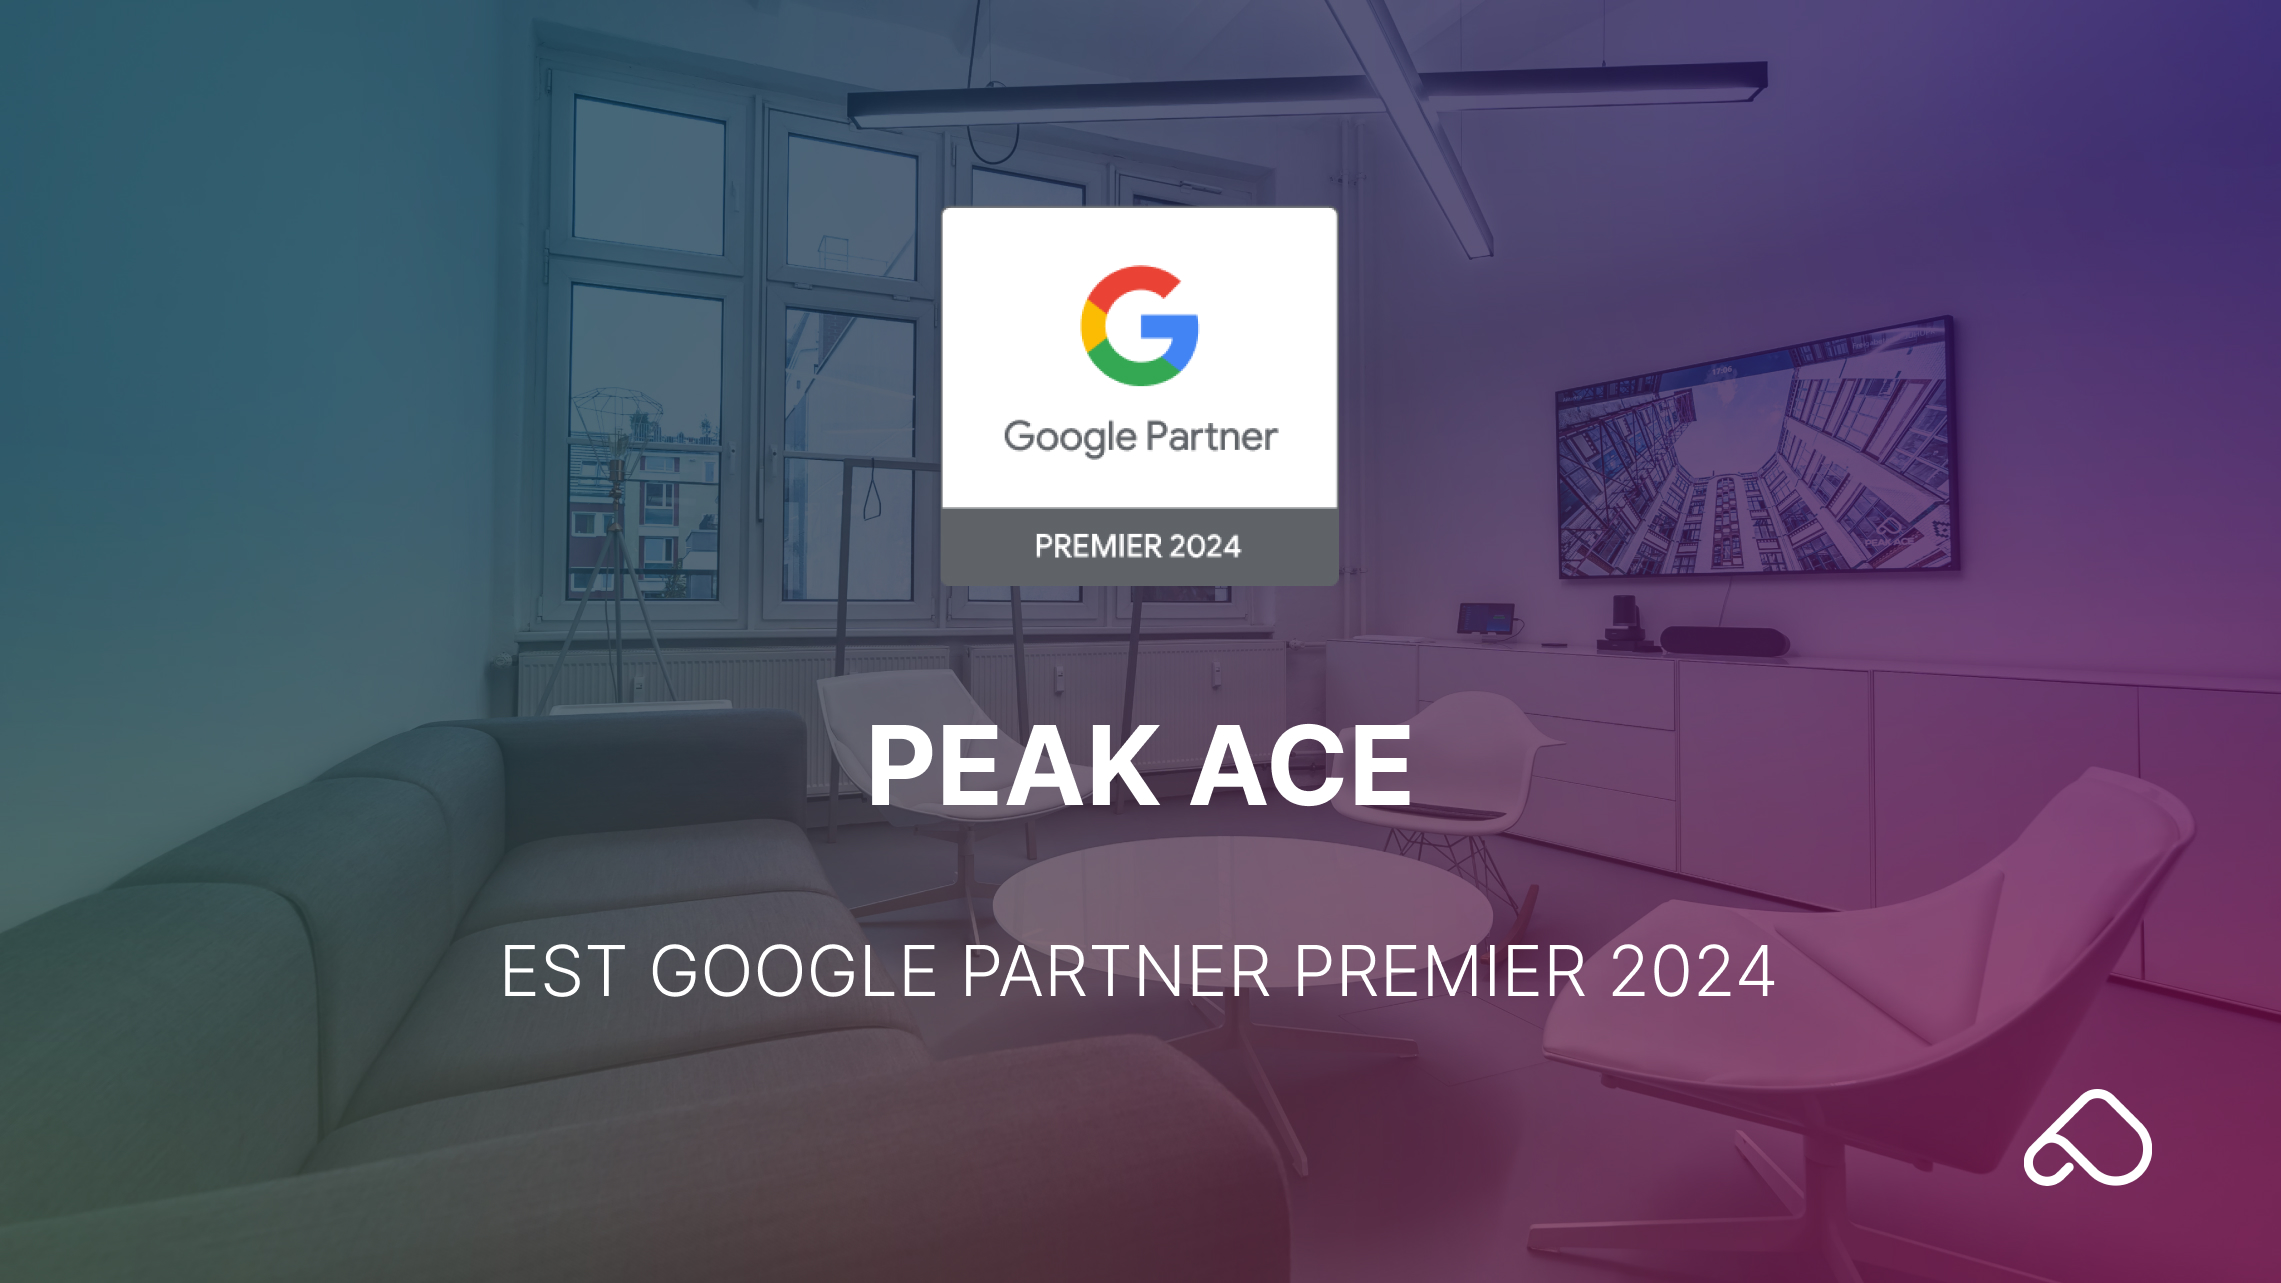 Google Partners Premier Peak Ace